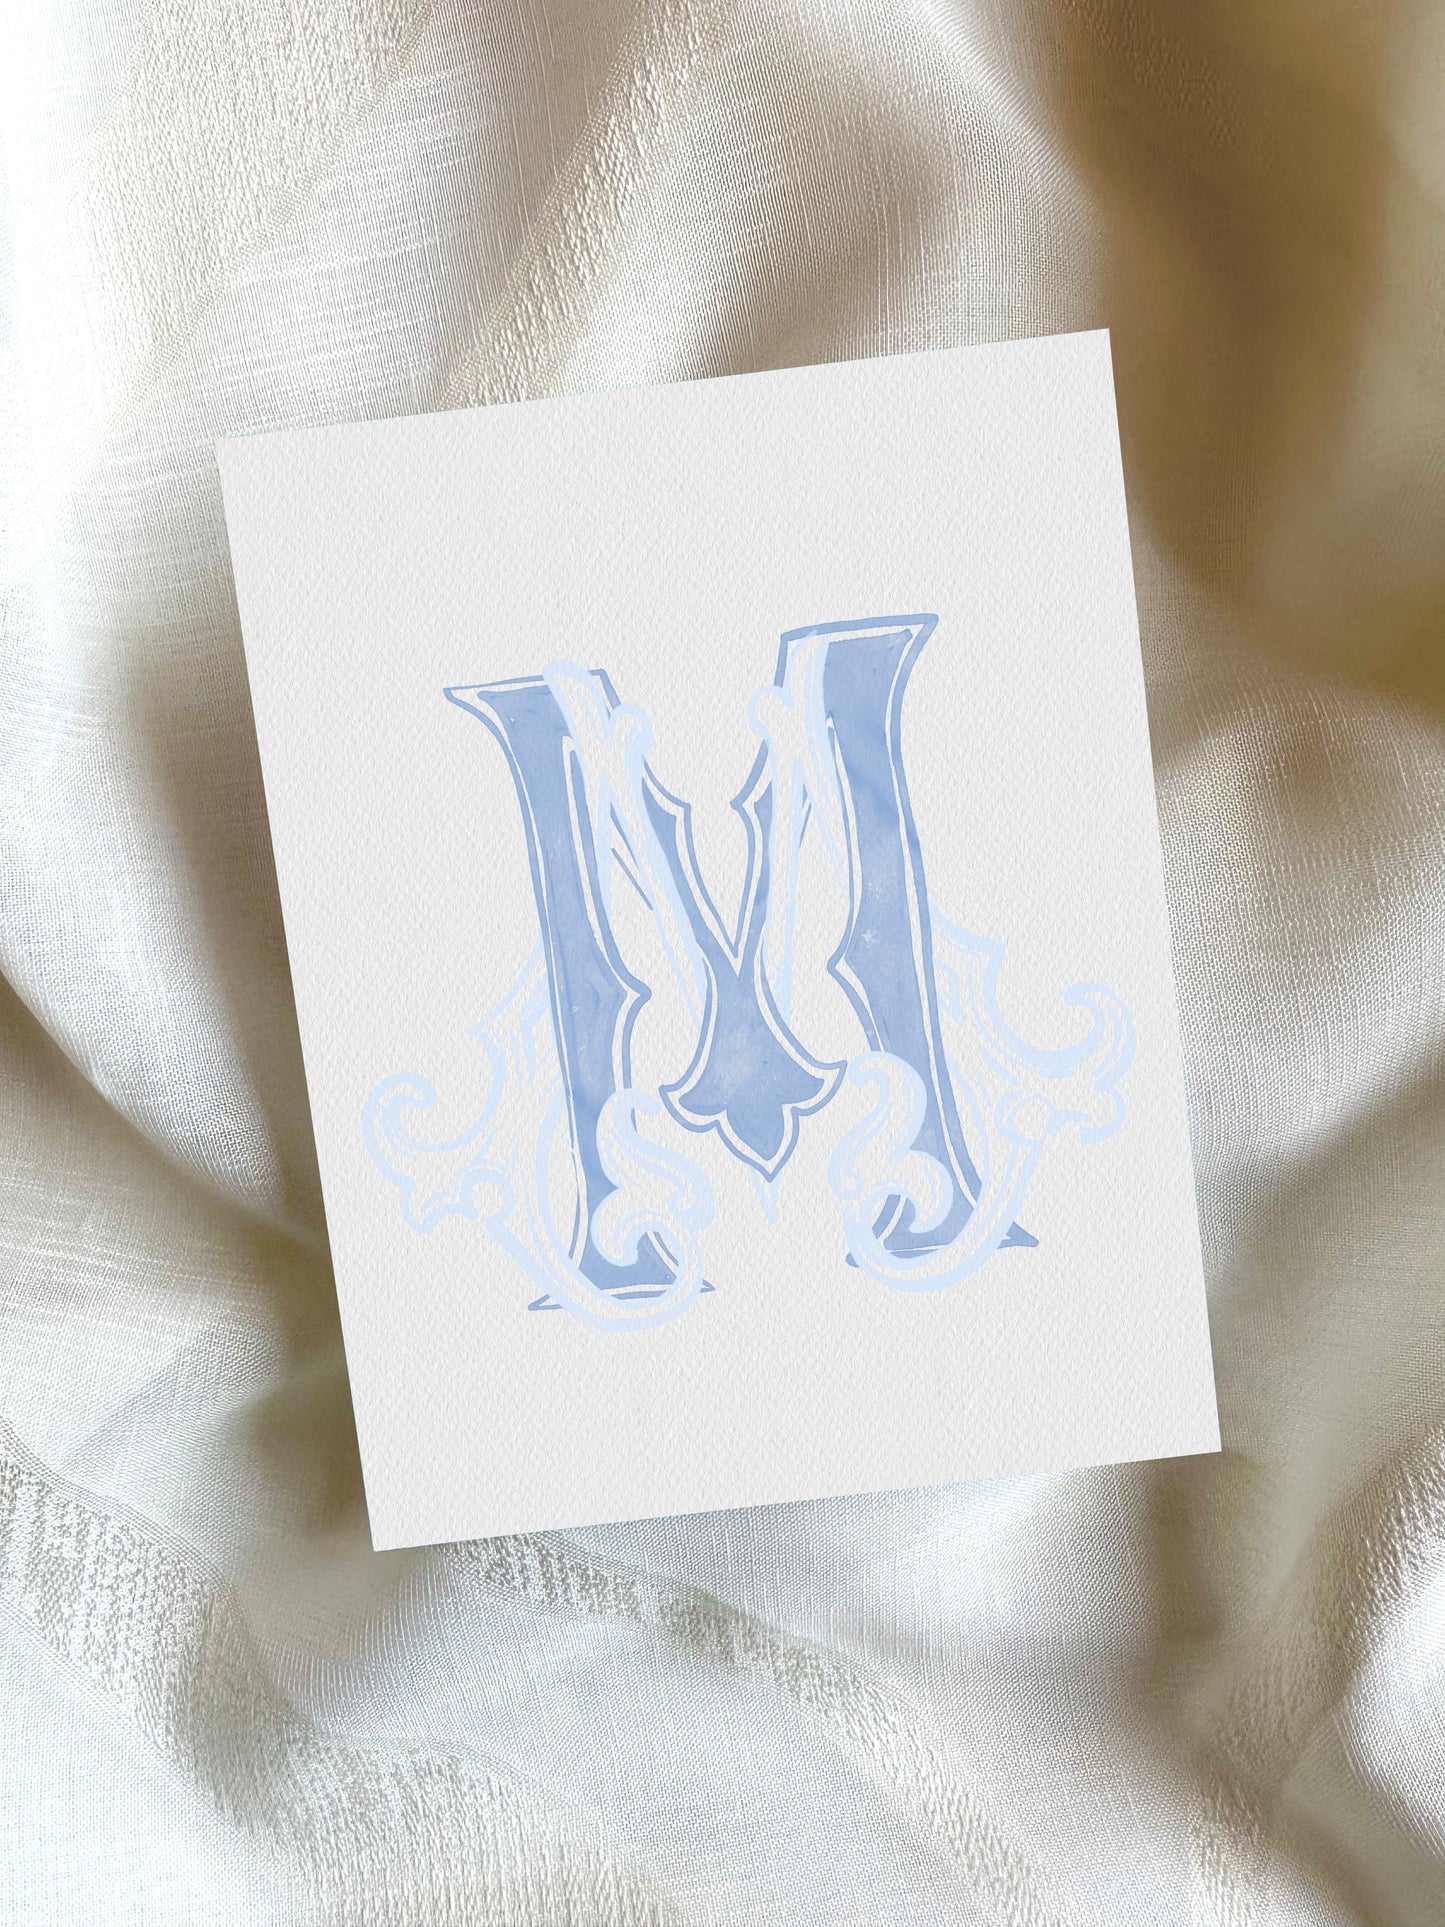 2 Letter Monogram with Letters MM | Digital Download - Wedding Monogram SVG, Personal Logo, Wedding Logo for Wedding Invitations The Wedding Crest Lab